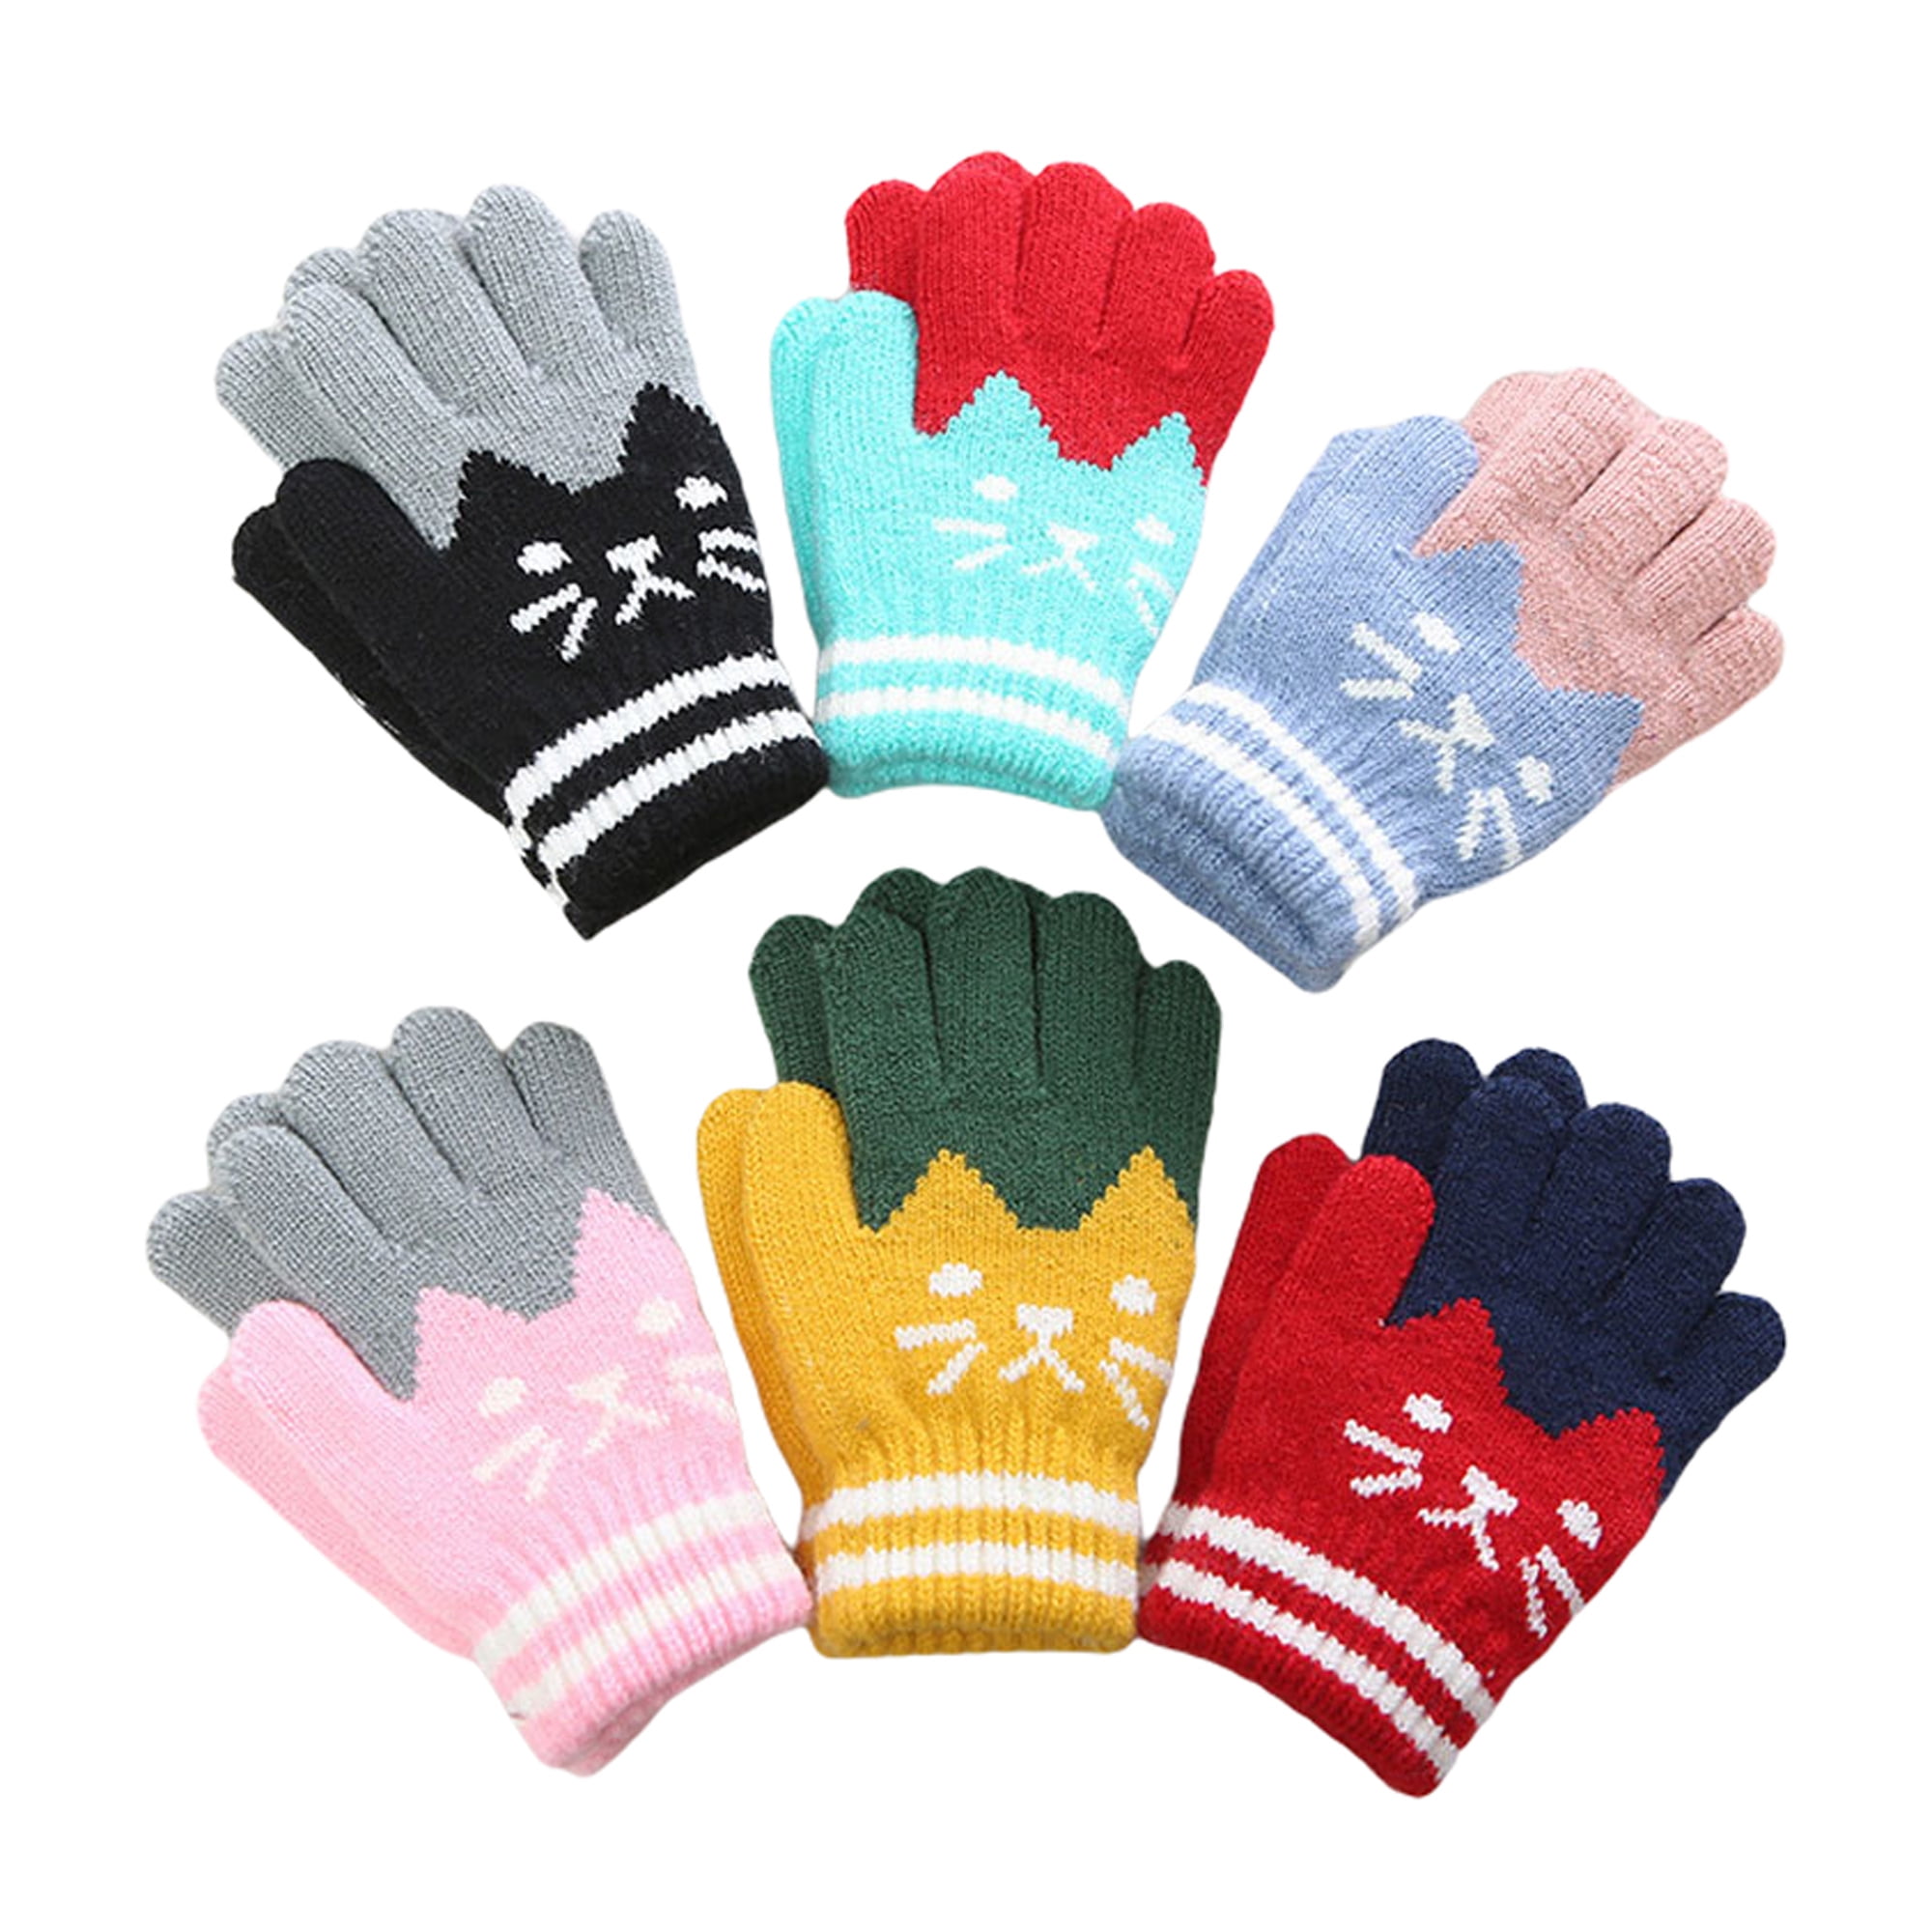 Haoohu Boys Girls Winter Warm Knit Gloves Mittens for Toddler Kids 